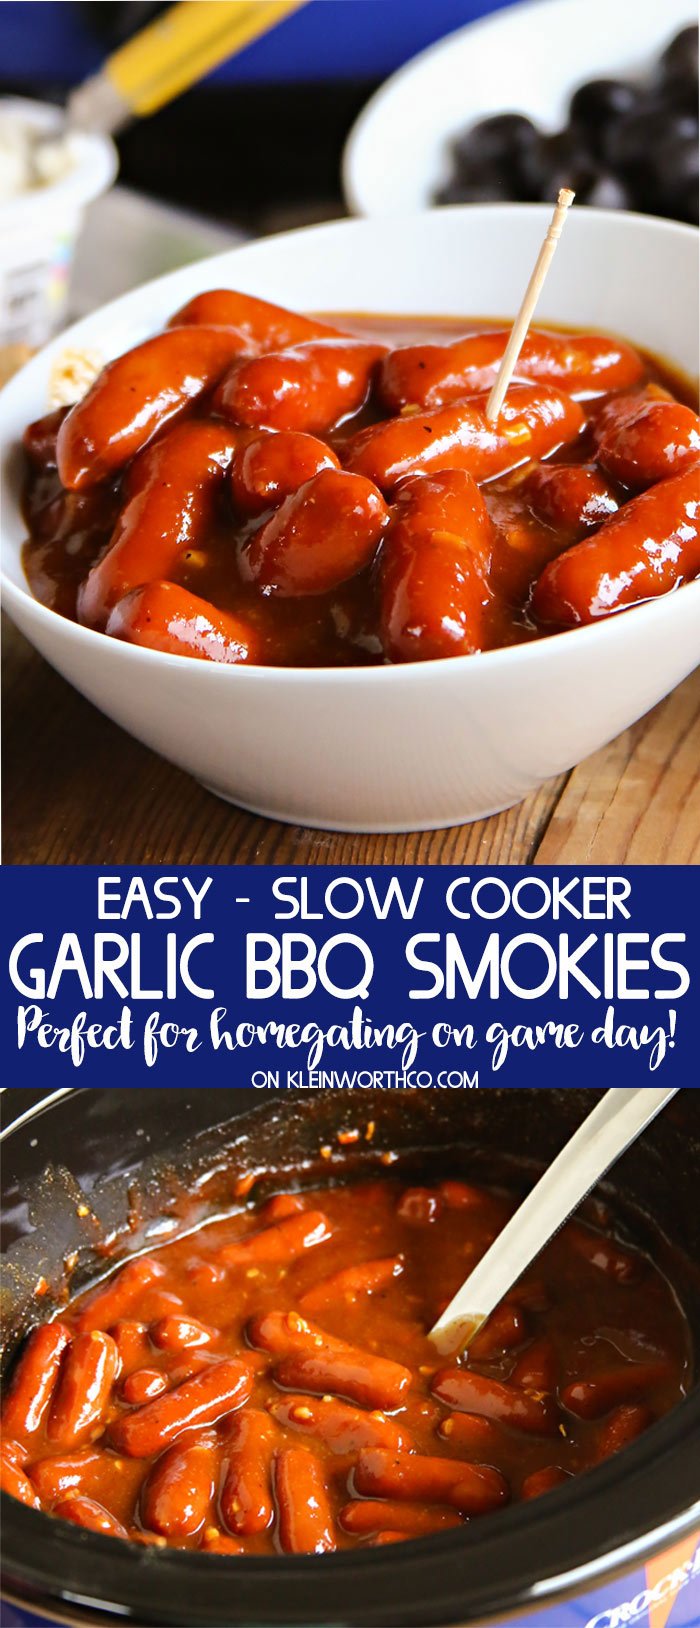 Easy Slow Cooker Garlic BBQ Smokies recipe